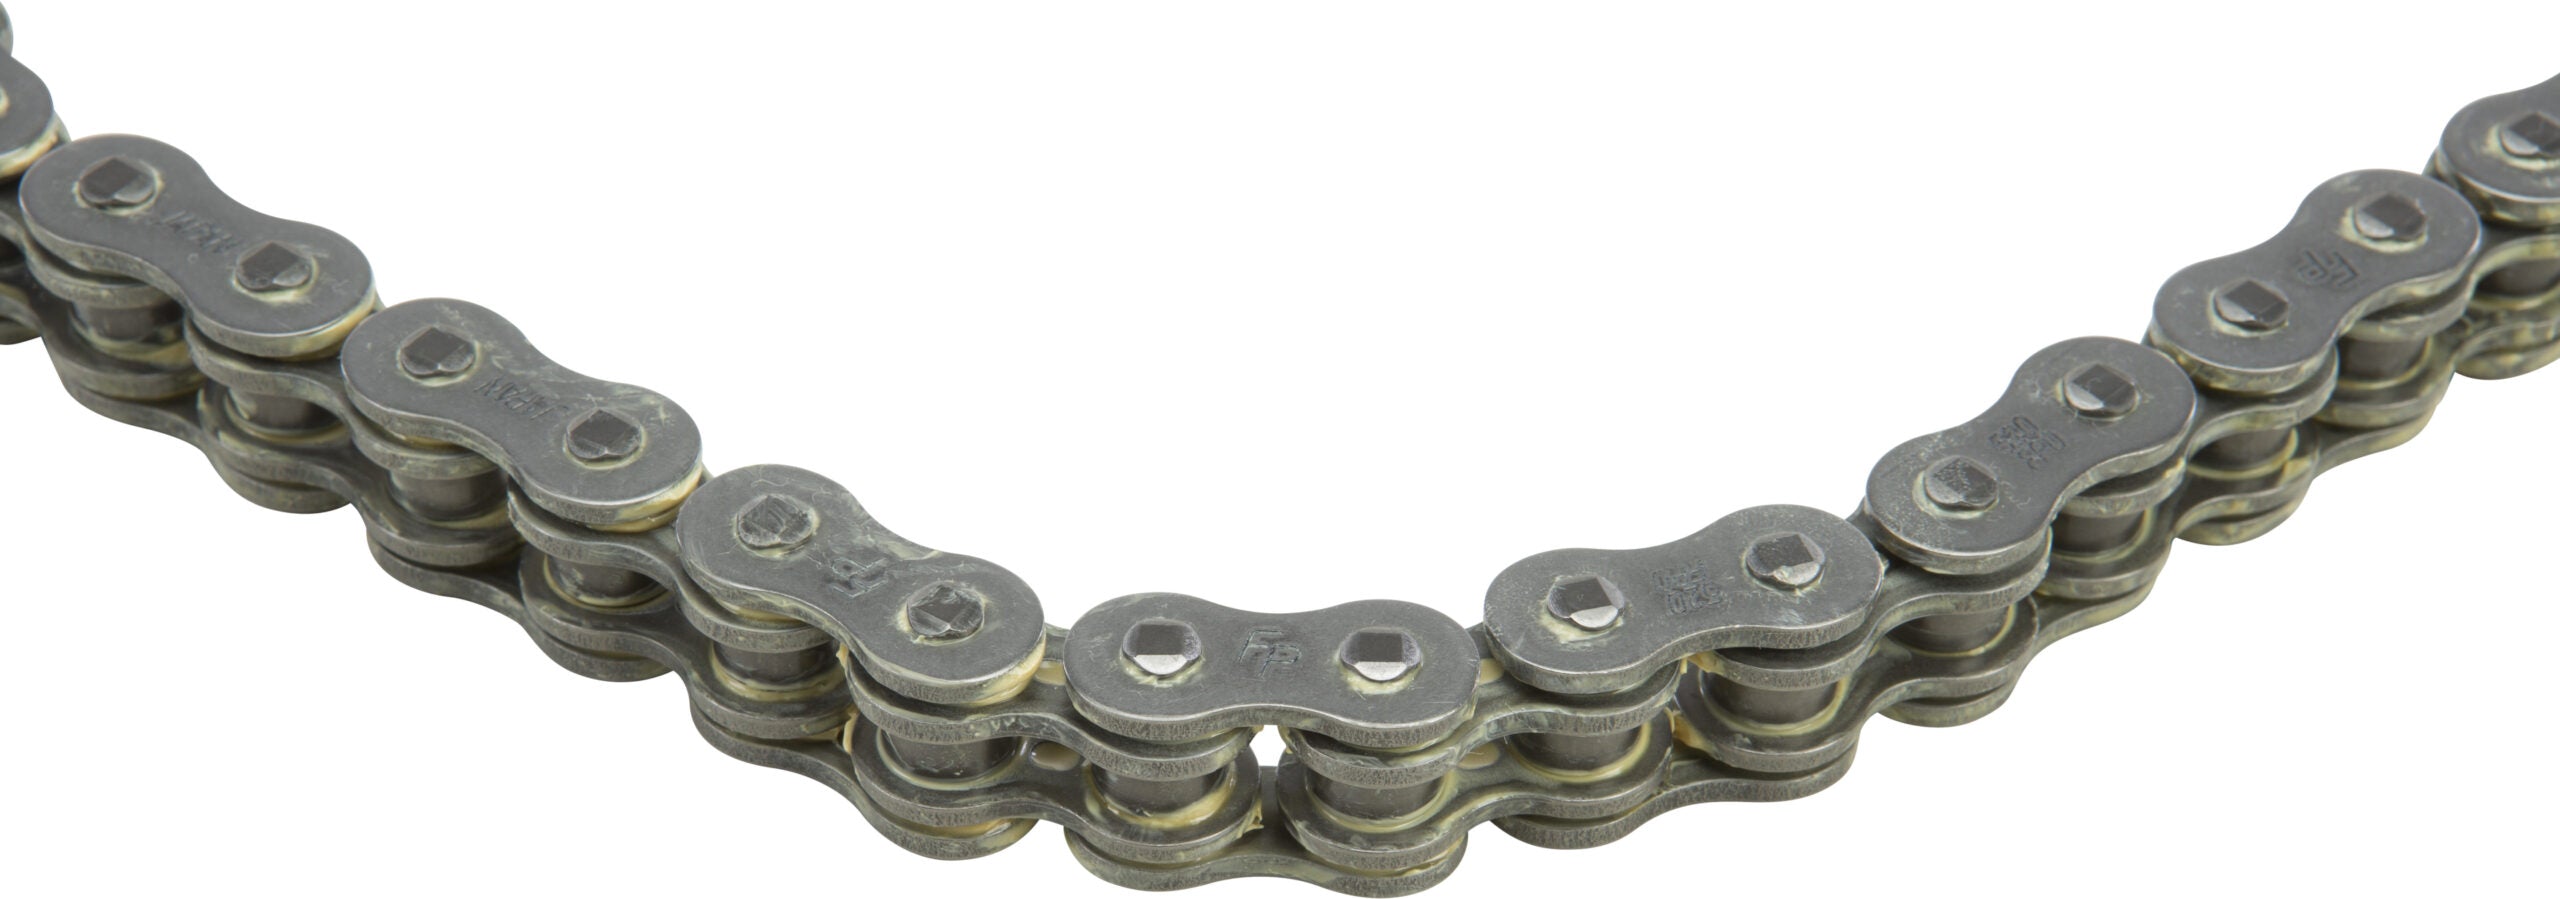 O-ring chain 520x150